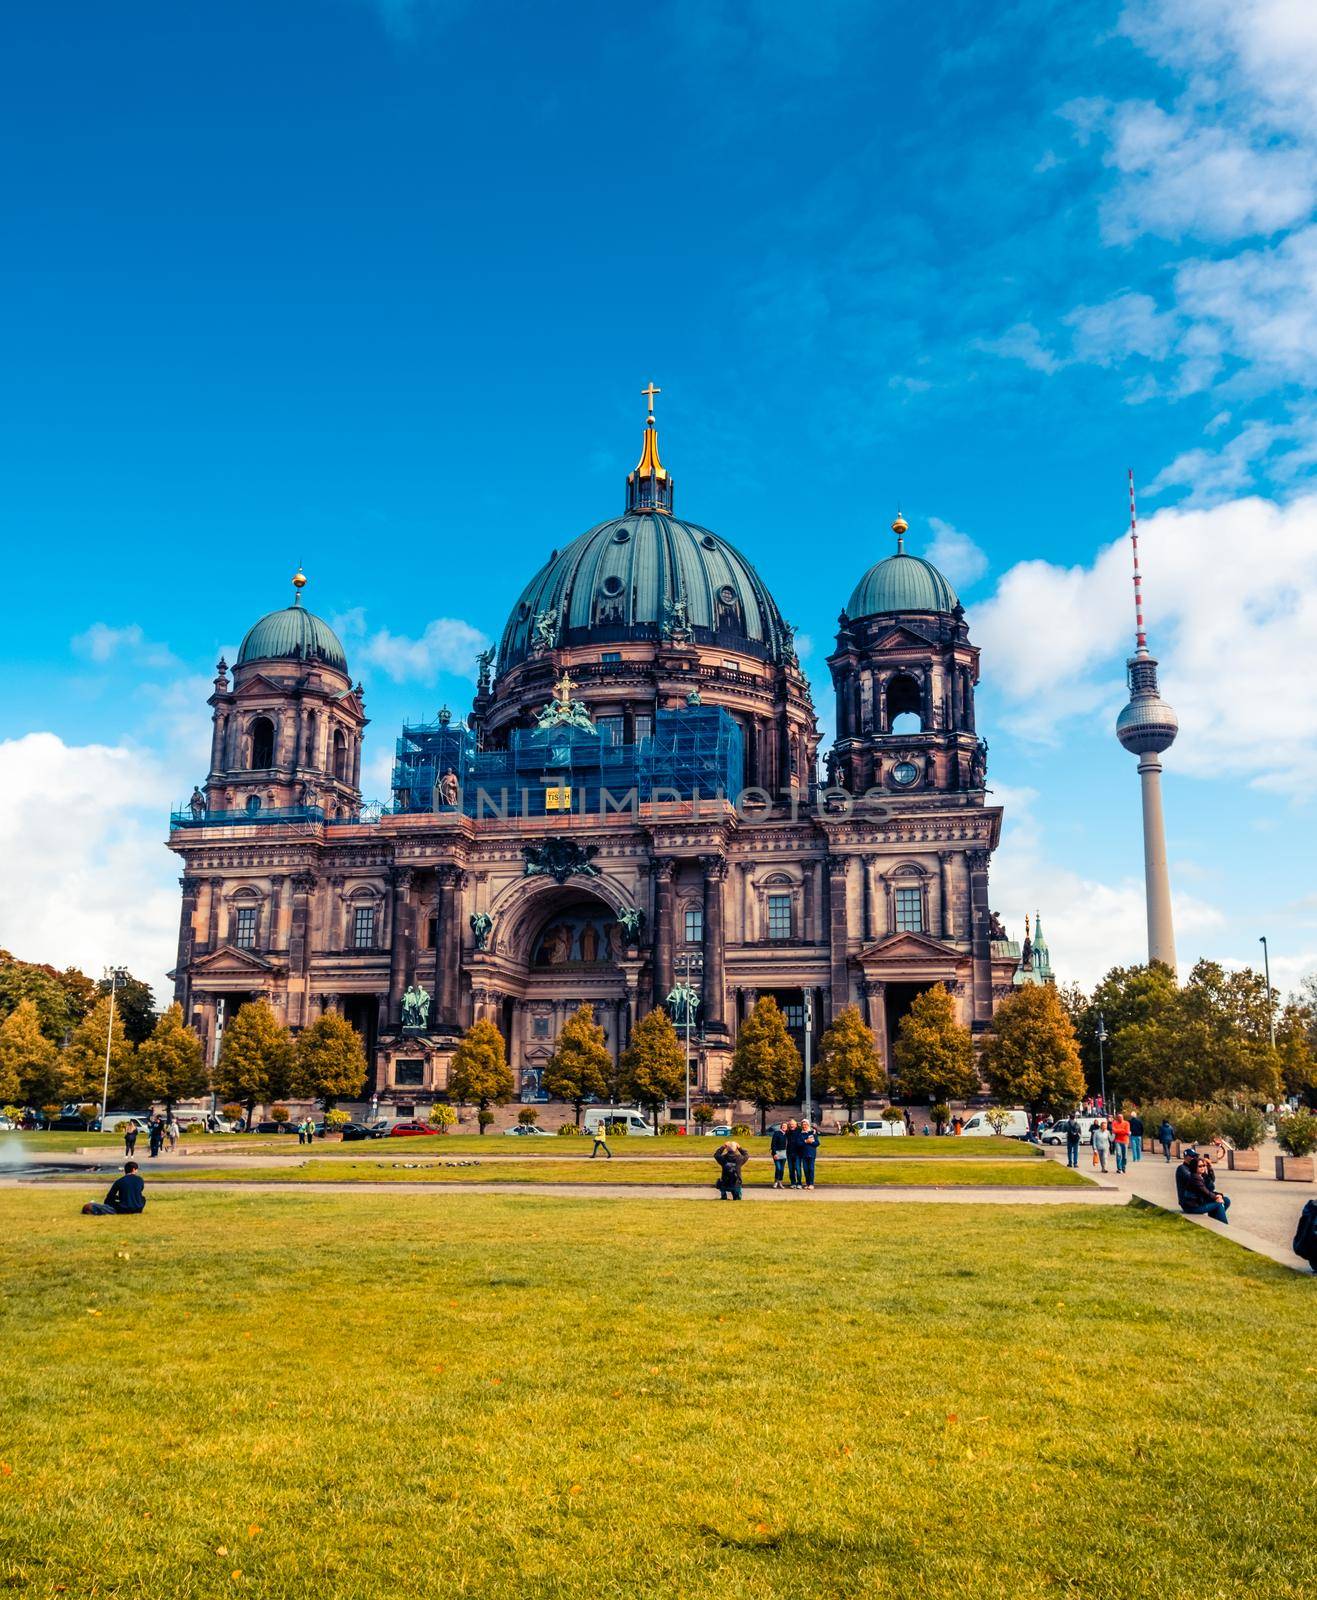 Majestic Berlin Cathedral under blue sky by GekaSkr